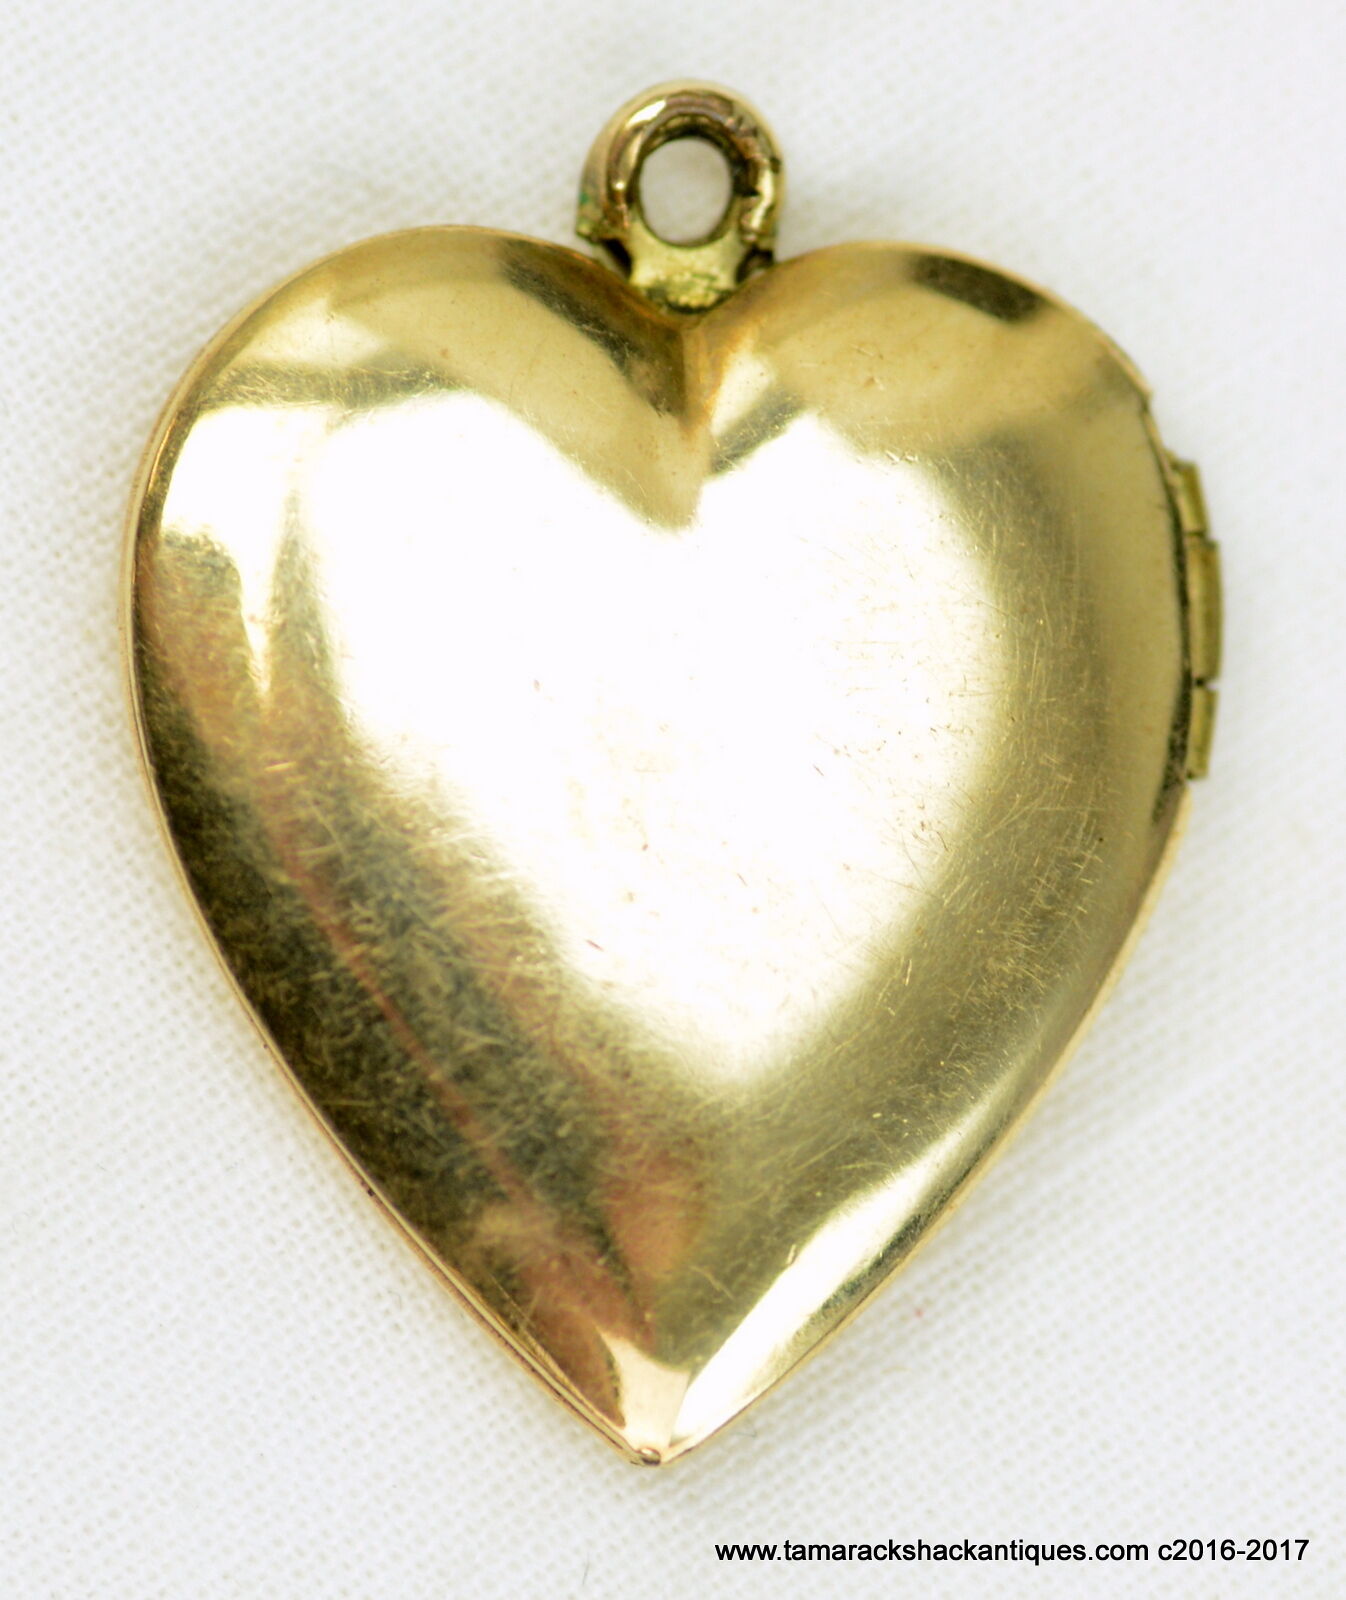 FB Jewels Solid 1 20 Gold Filled 16mm Enameled Flower I Love You Heart Locket